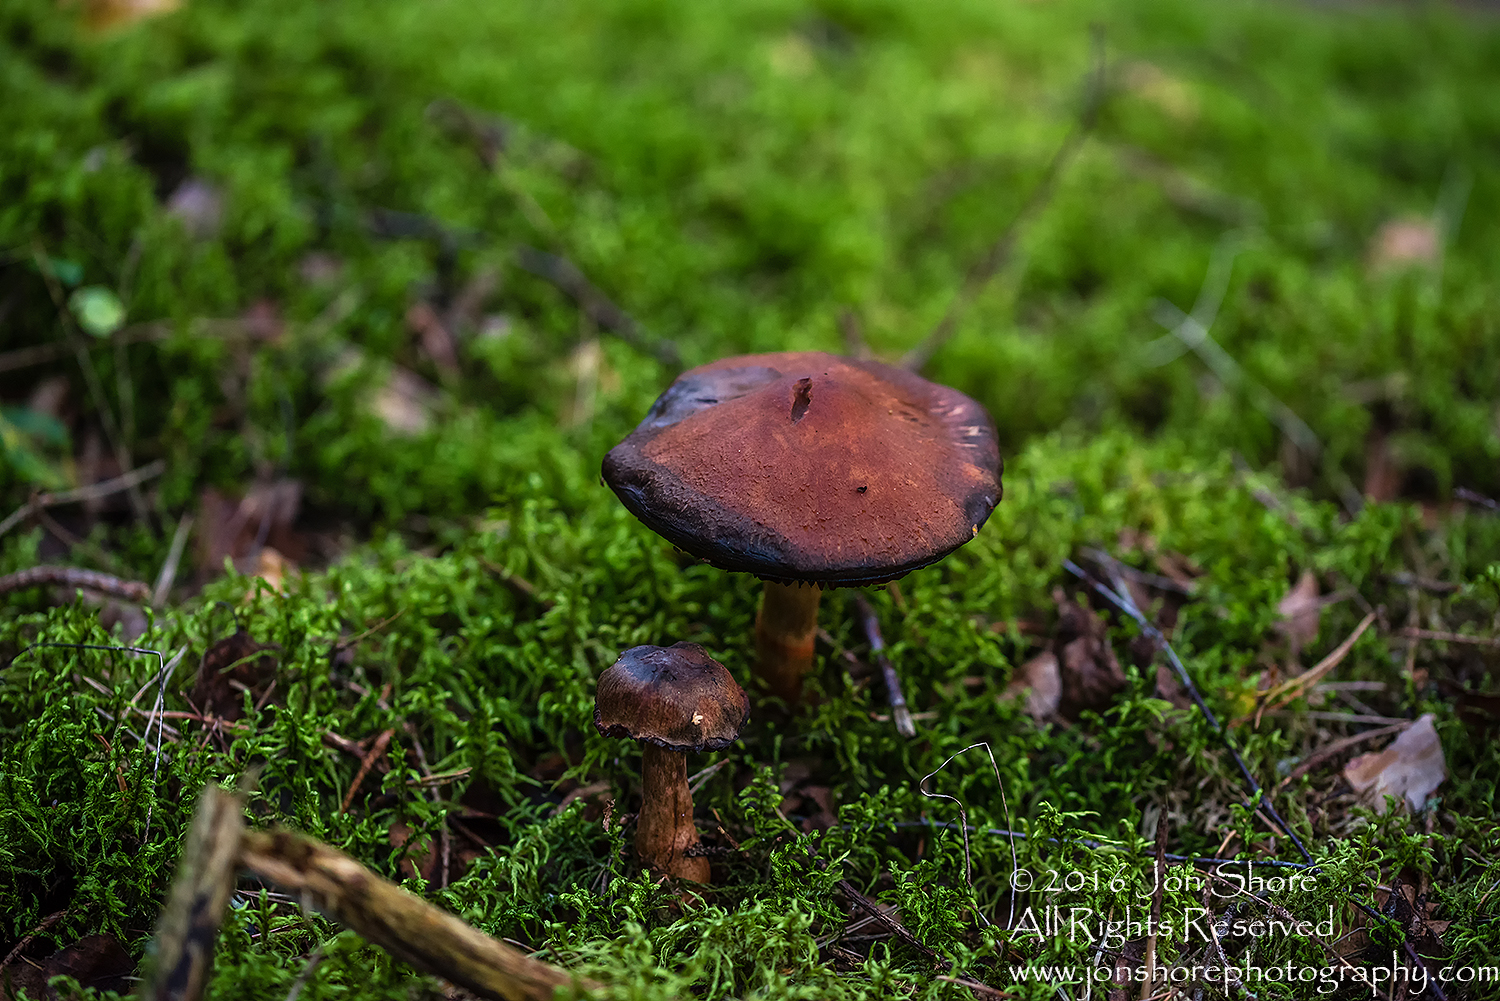 Wild Mushroom Close-up - Latgale, Latvia. Tamron 90mm Macro lens